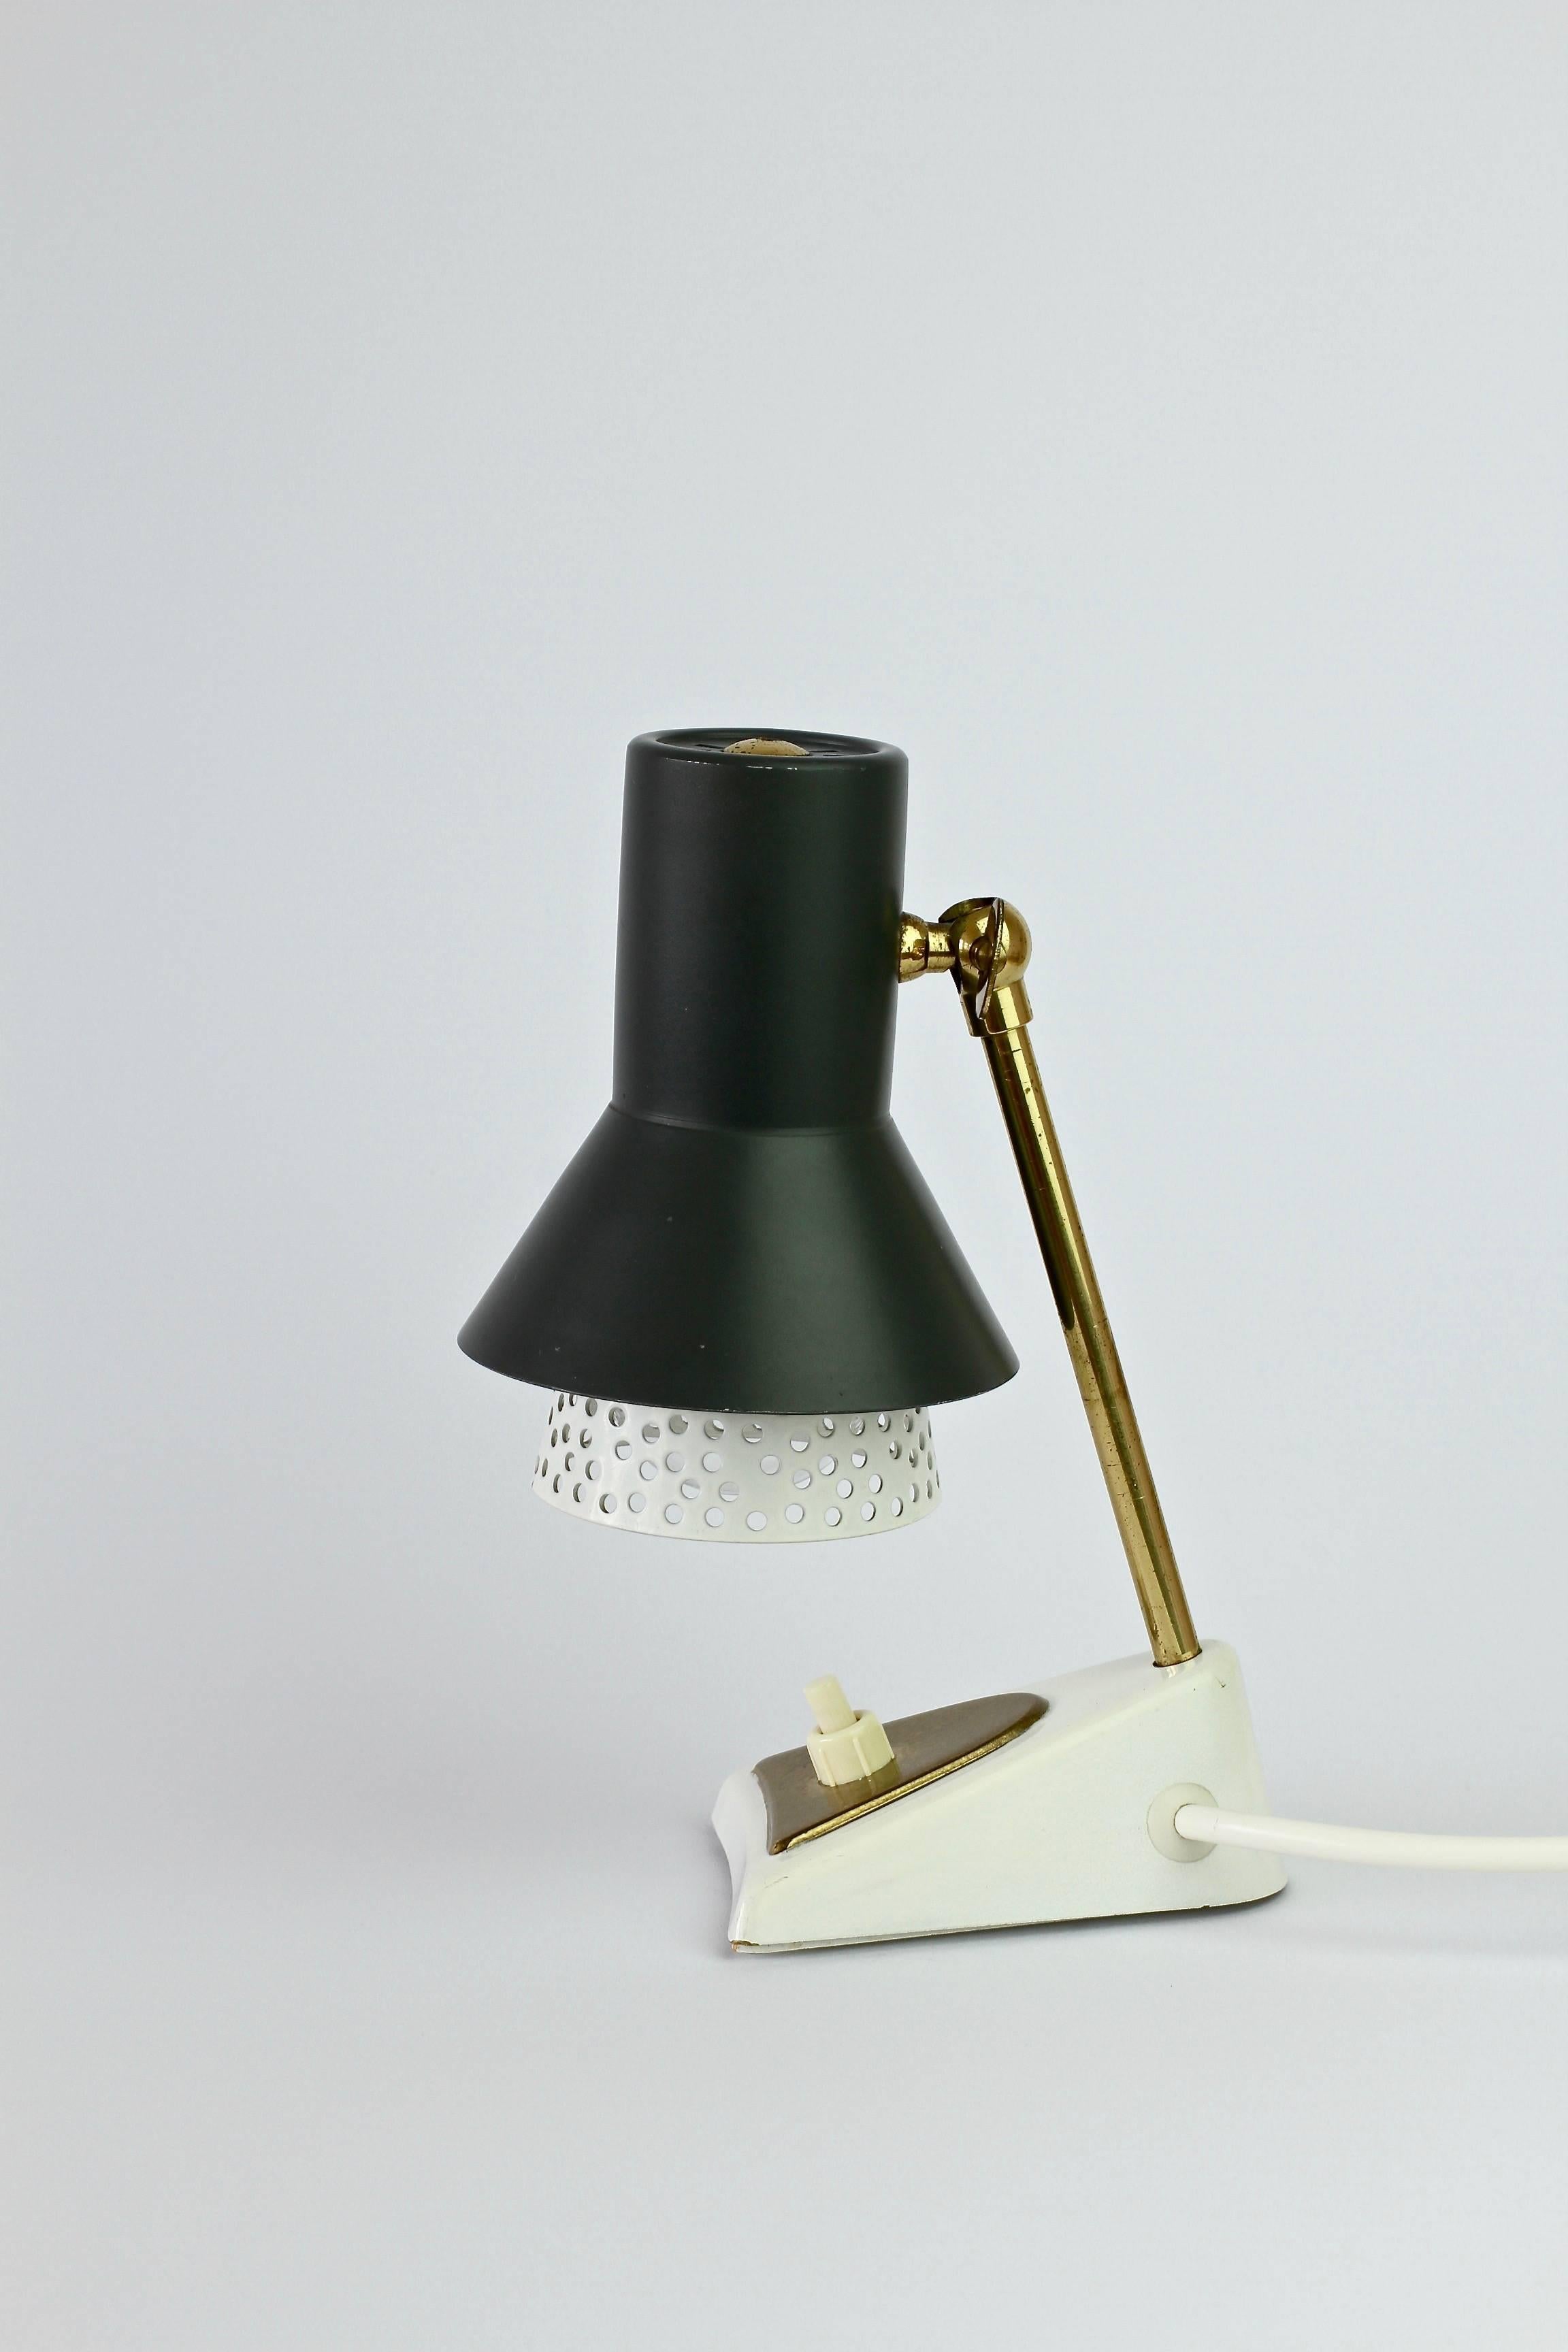 20th Century Mathieu Matégot Style 1950s Perforated Metal Shade Table Lamp or Desk Light